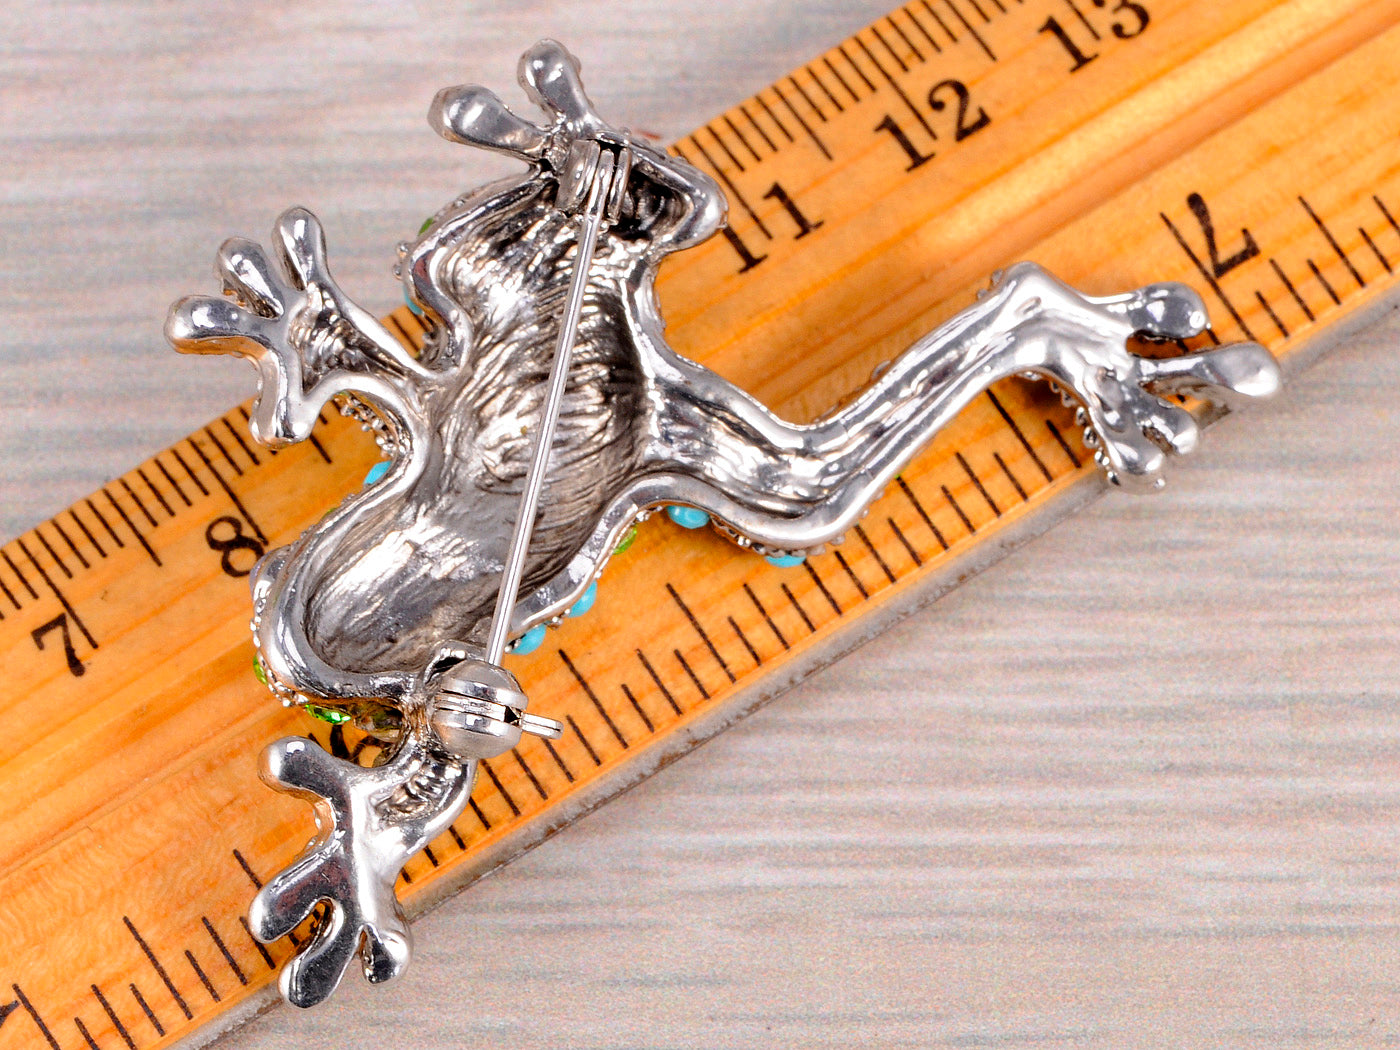 Vintage Reproduction Amethyst Jumping Frog Pin Brooch